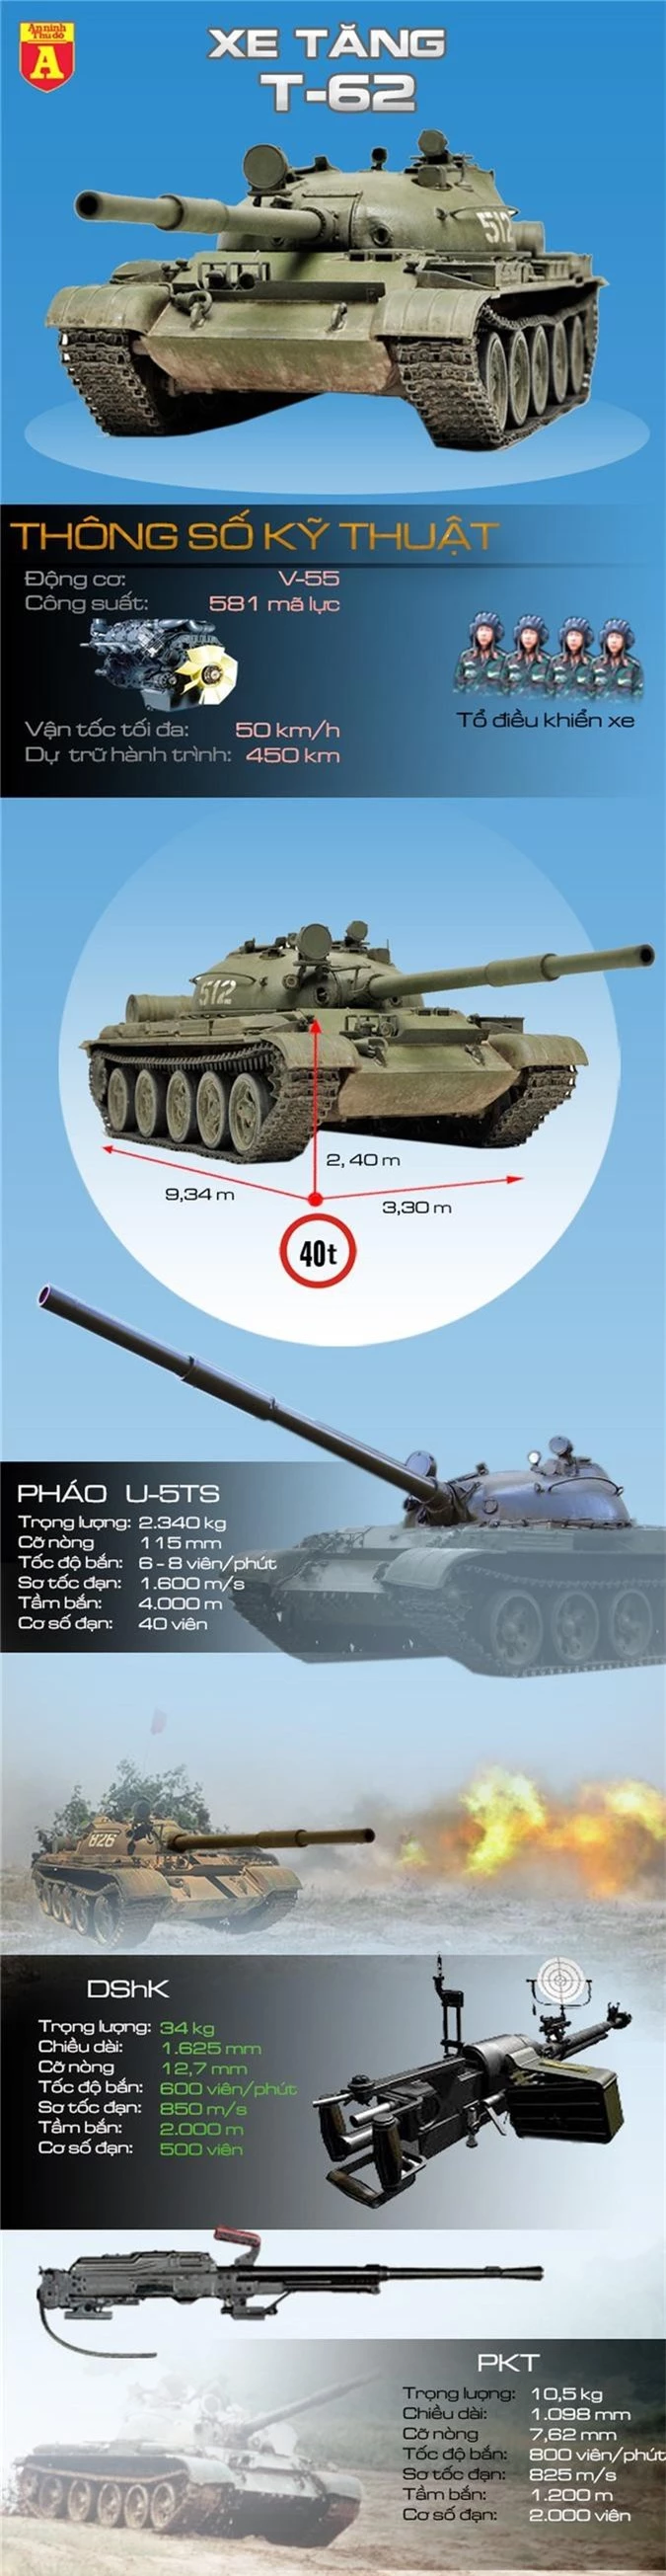 Xe tăng T-62 Việt Nam khai hỏa